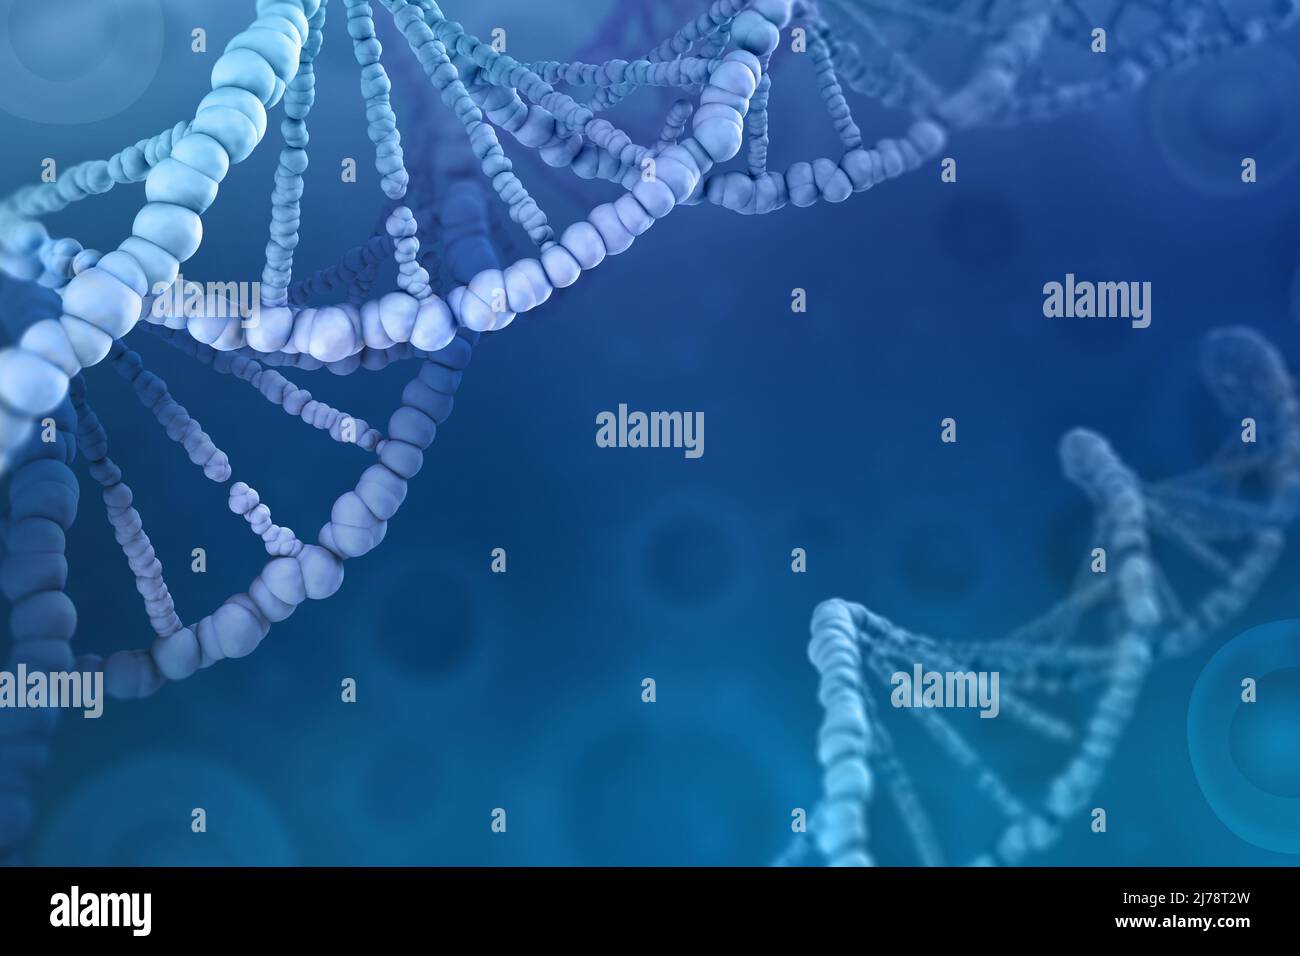 3D illustration of a DNA molecule. Investigation of cellular structure. Modern digital concept on a blue background Stock Photo